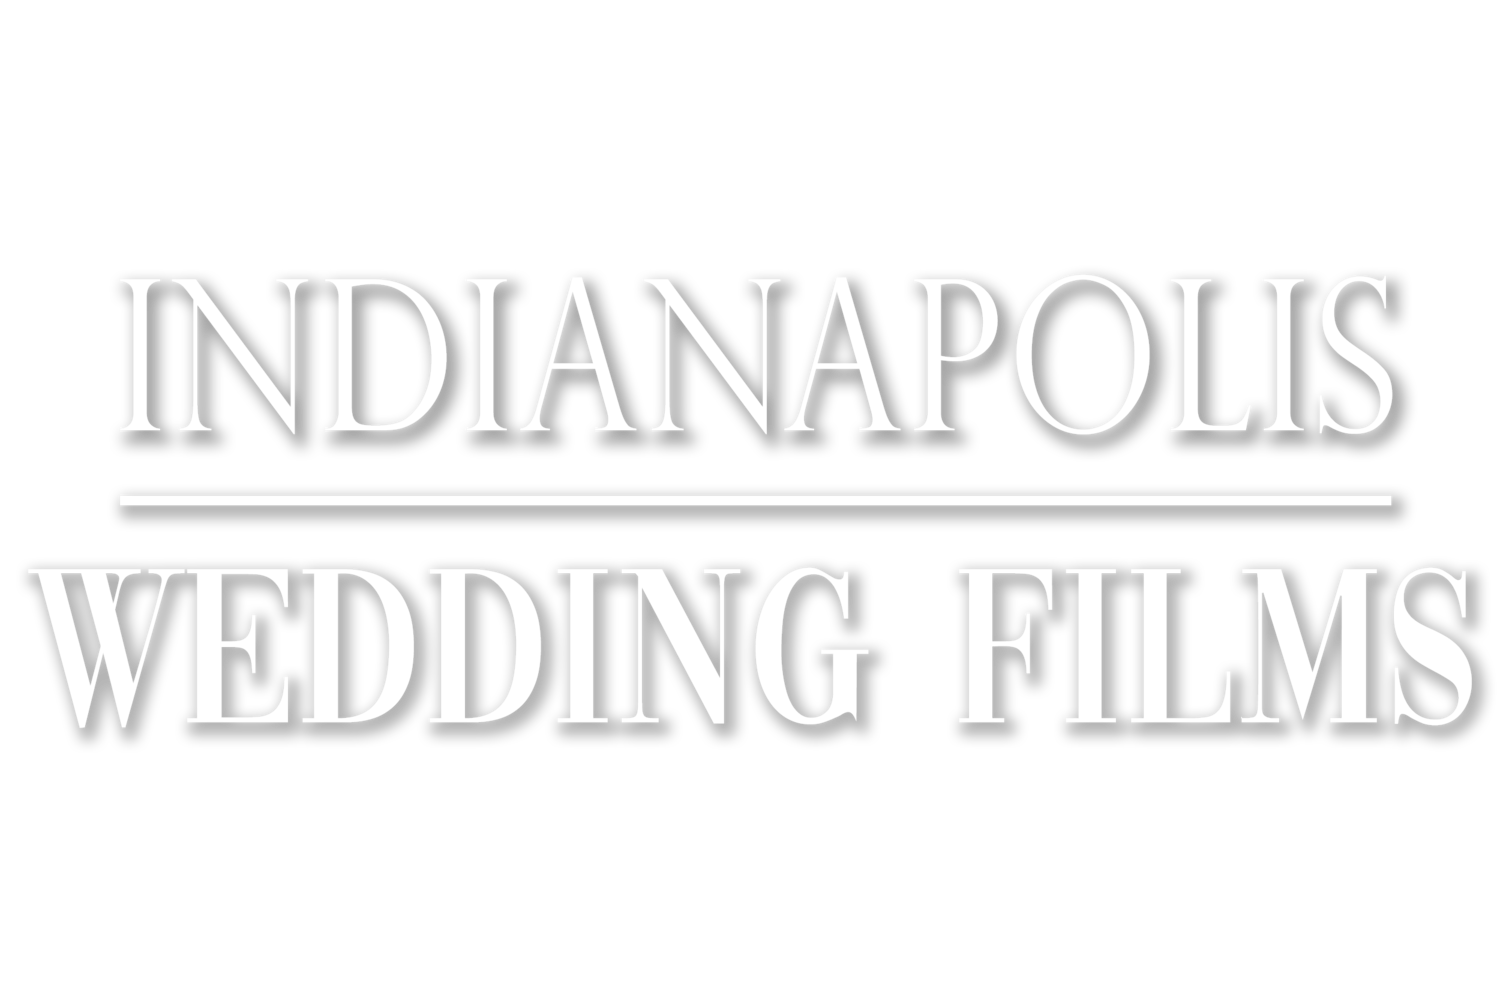 INDIANAPOLIS WEDDING FILMS